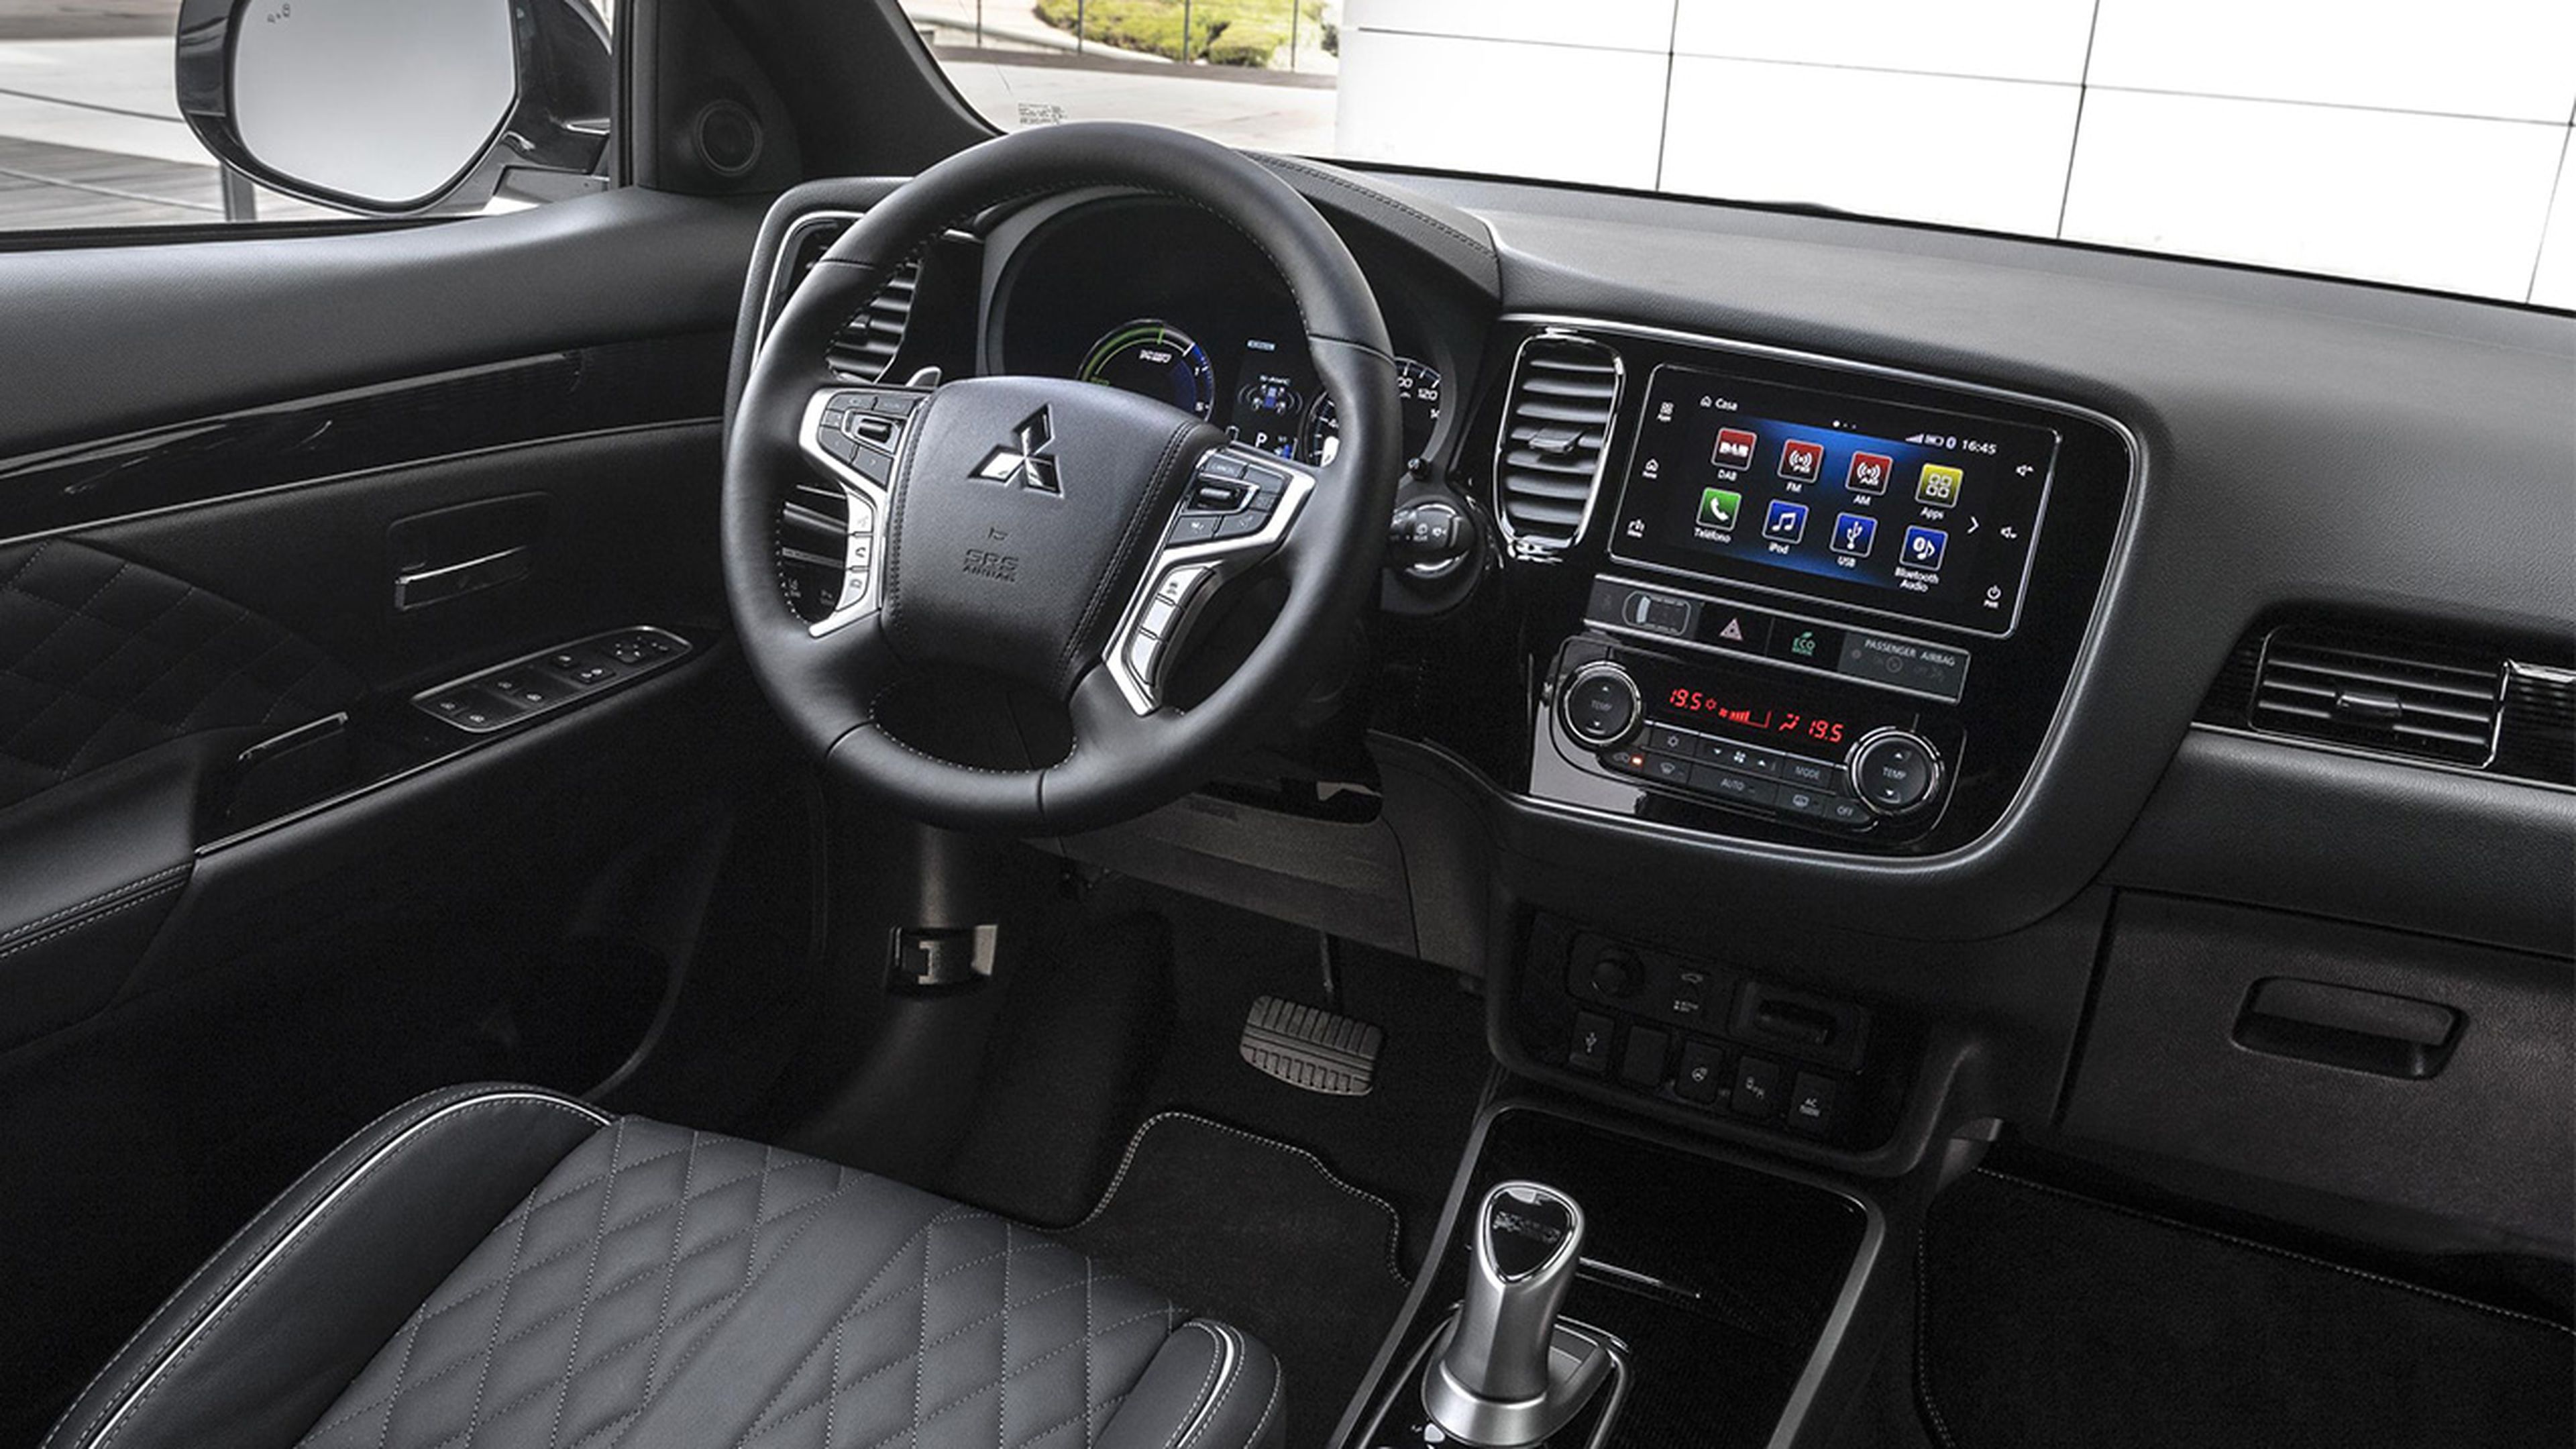 Mitsubishi Outlander PHEV interior